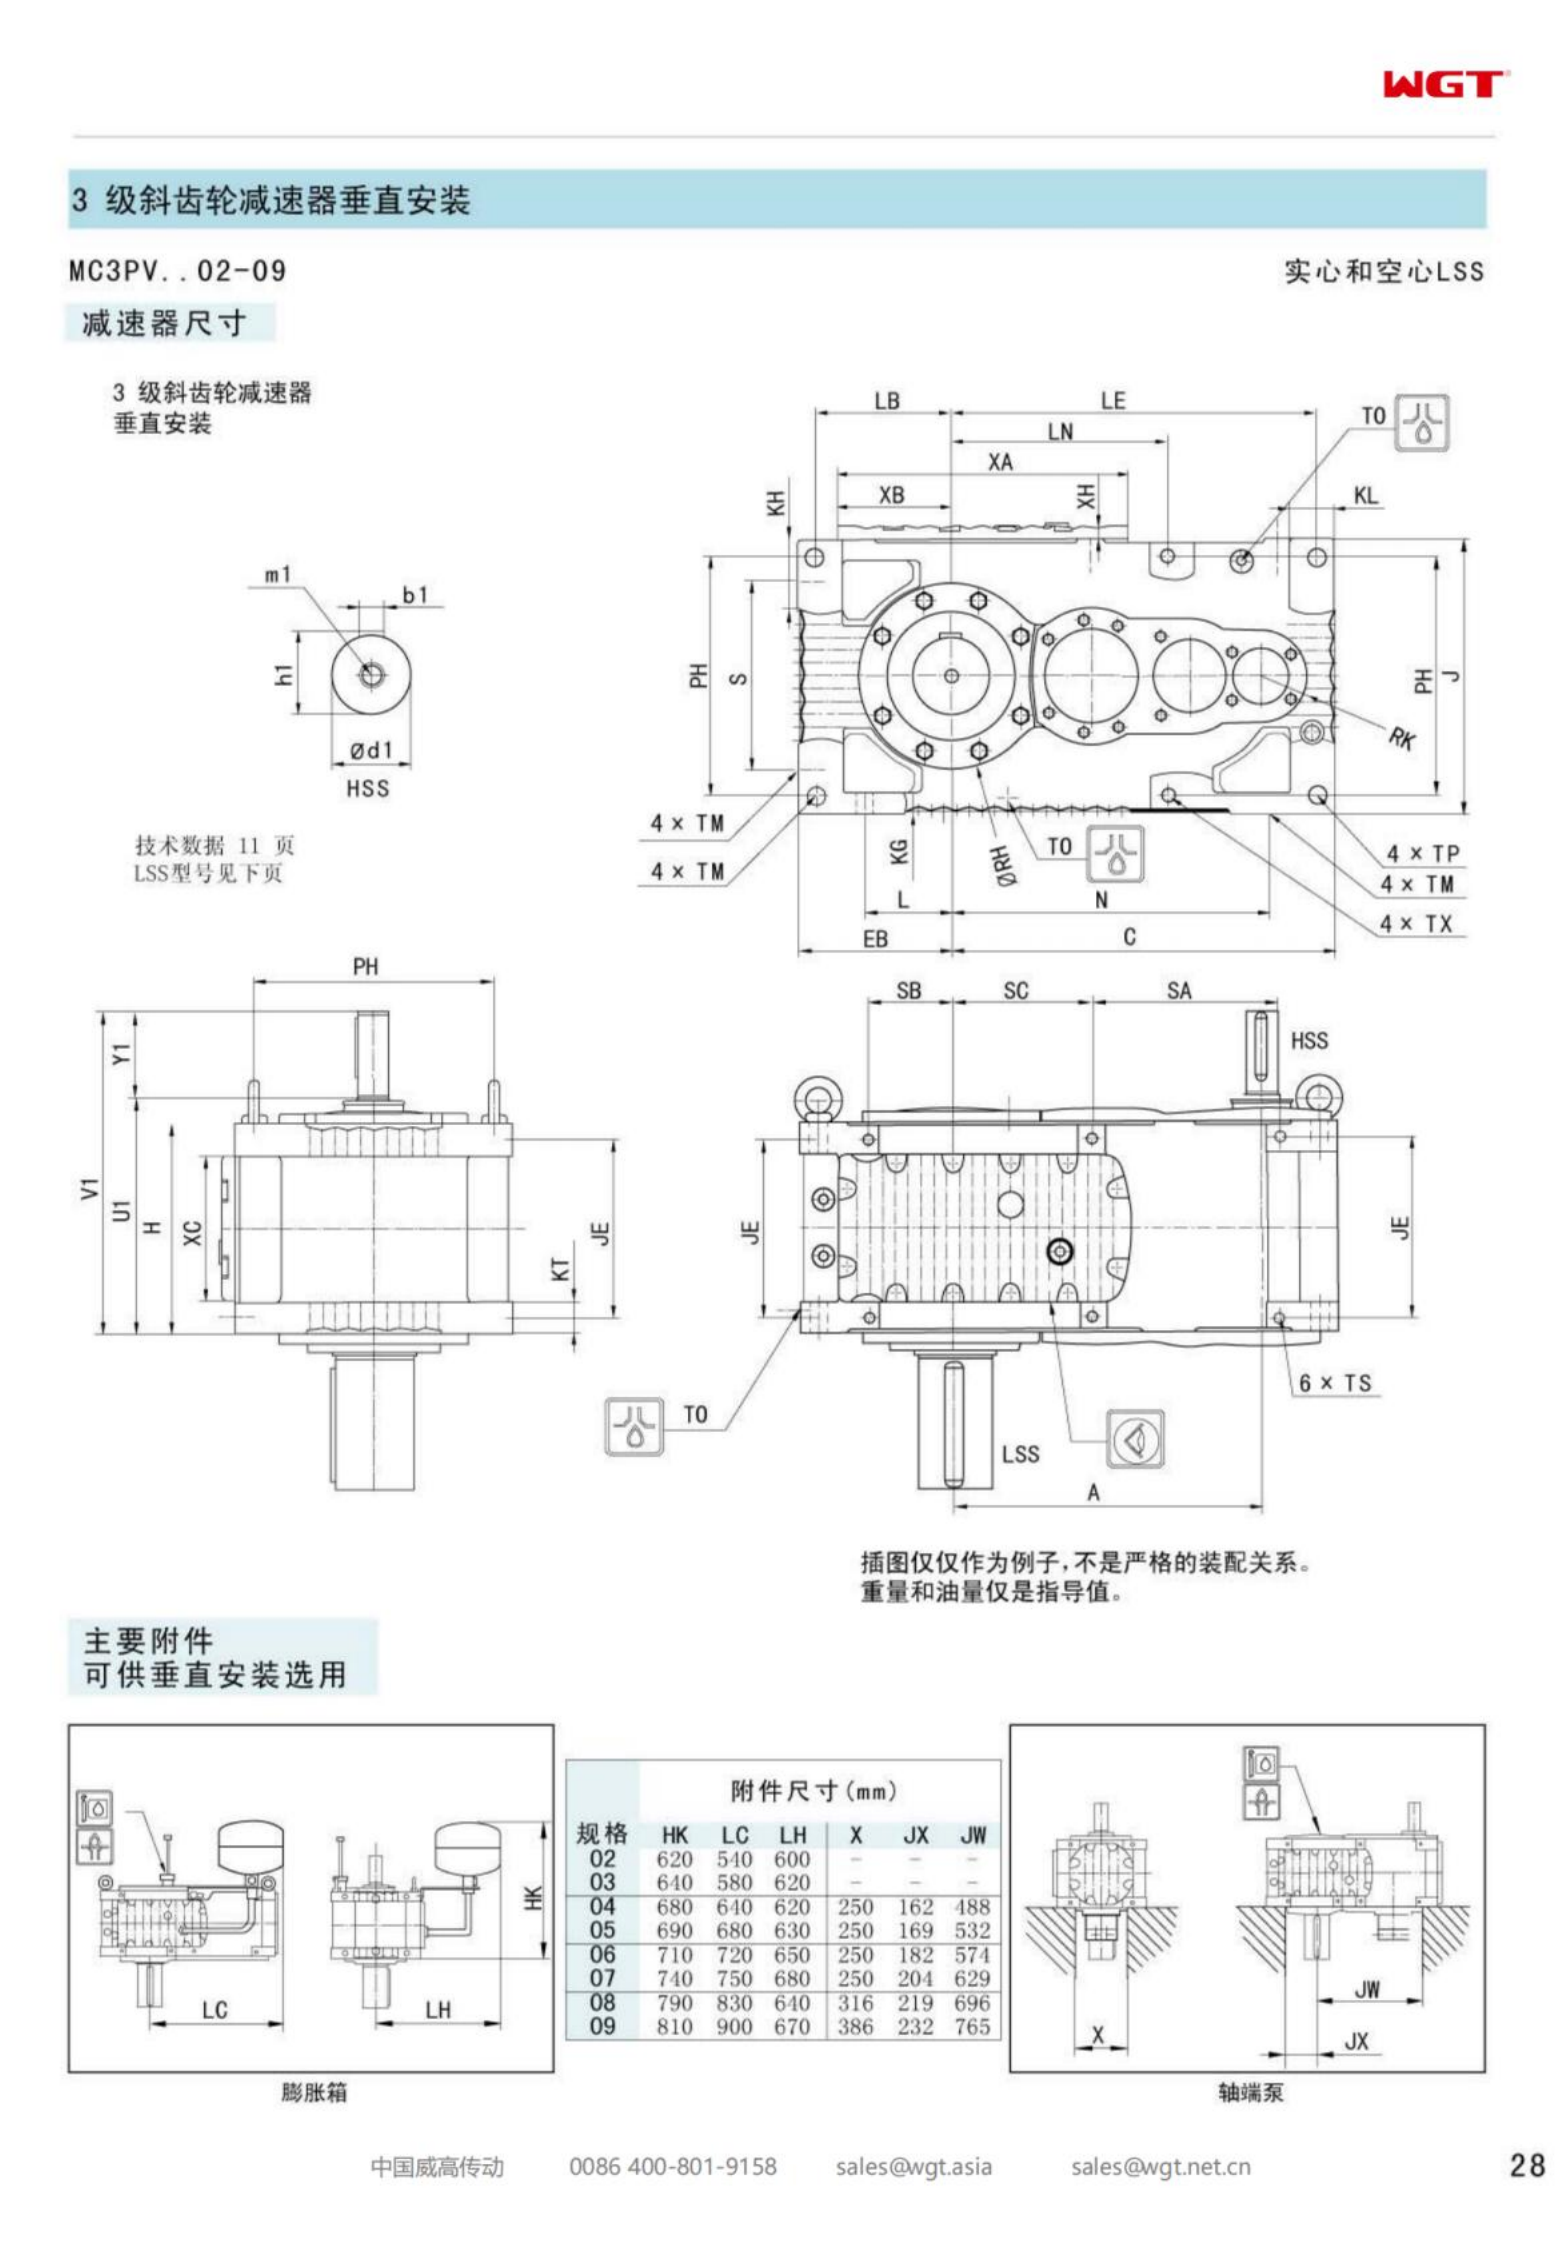 MC3PVHF08 replaces _SEW_MC_Series gearbox (patent)